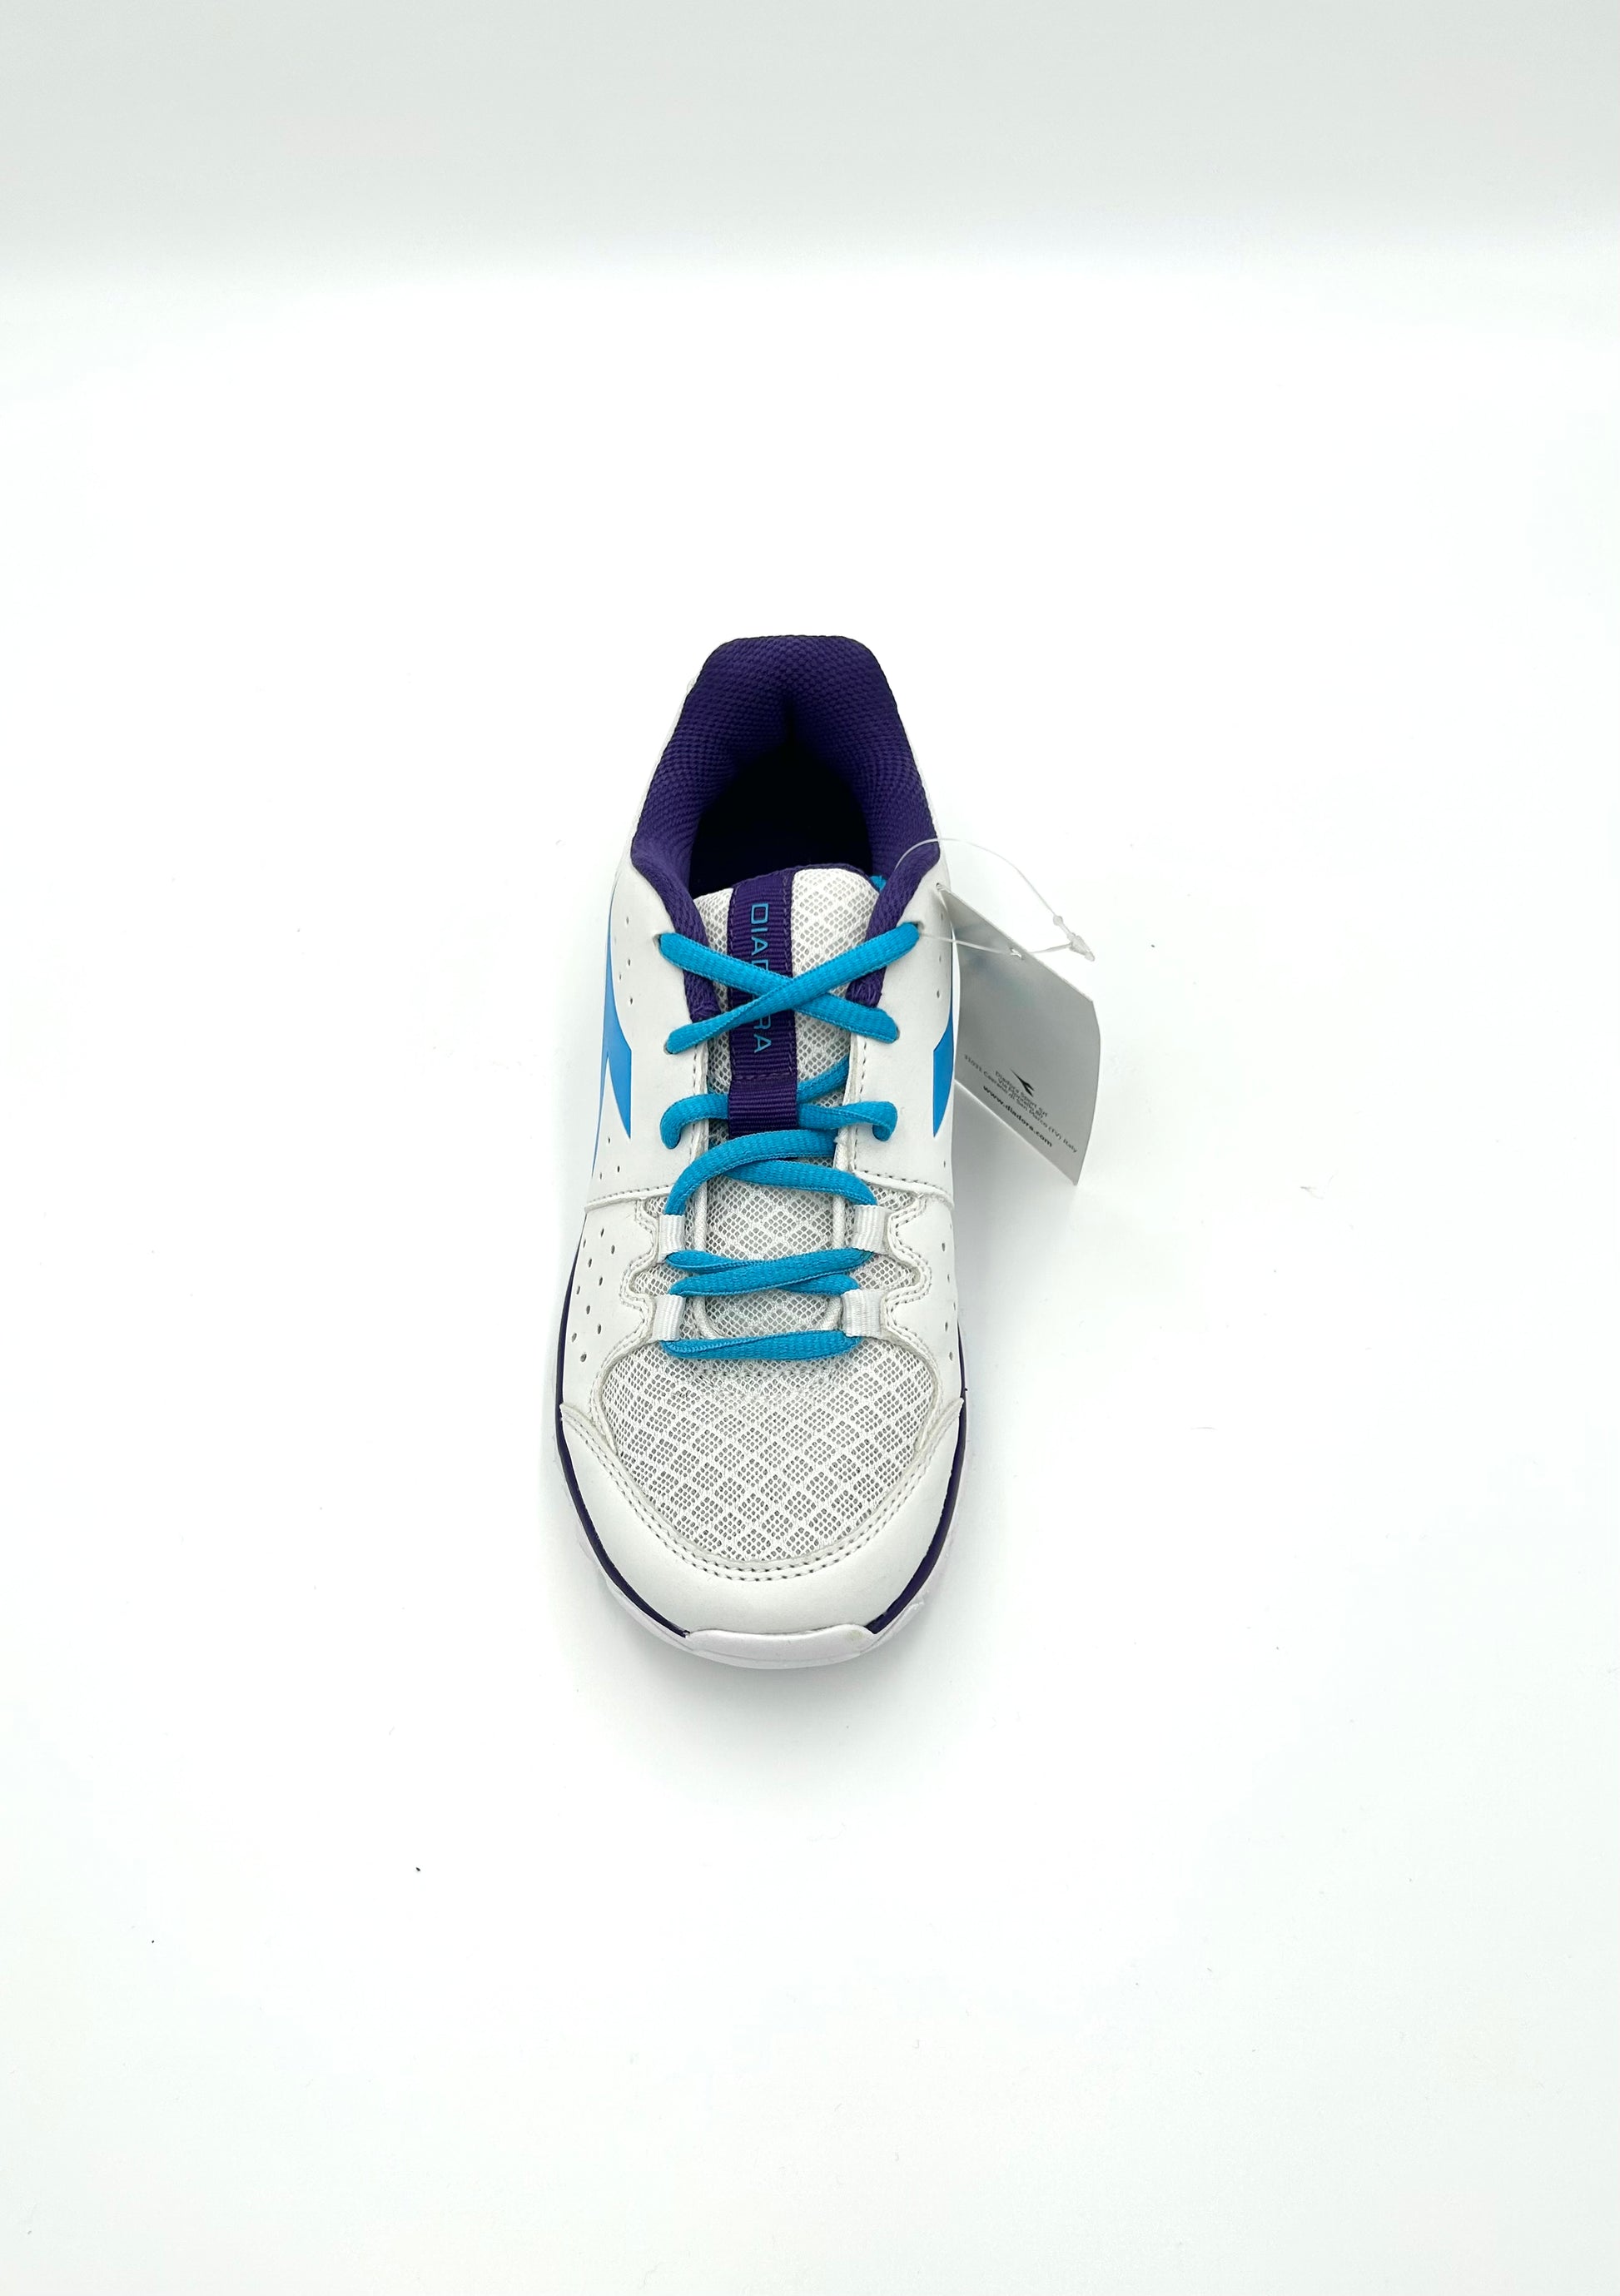 Diadora Sneakers HAWK 7 W - white and blue fluo - Diadora